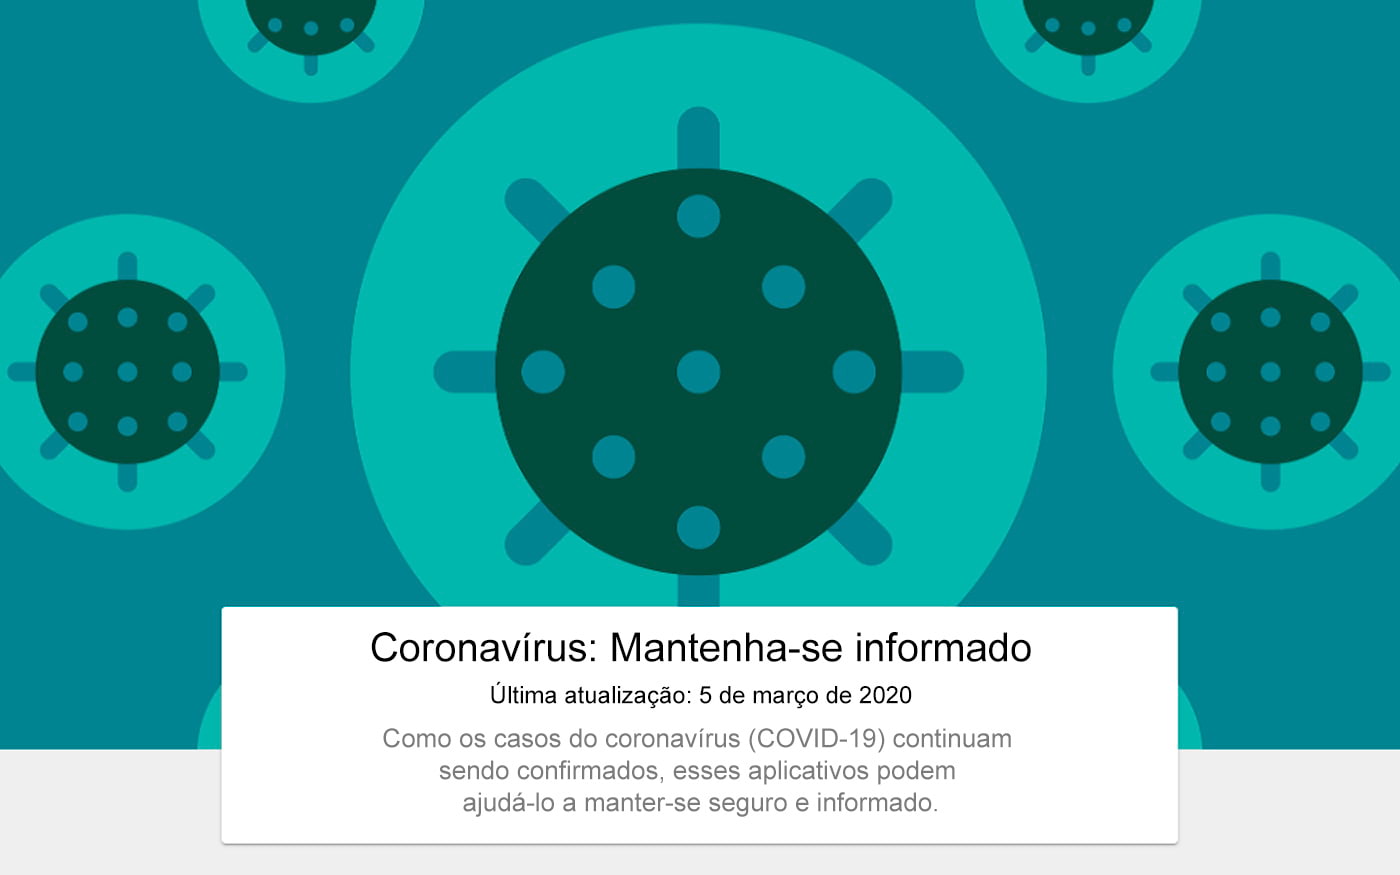 Coronavirus now has dedicated section on Google Play